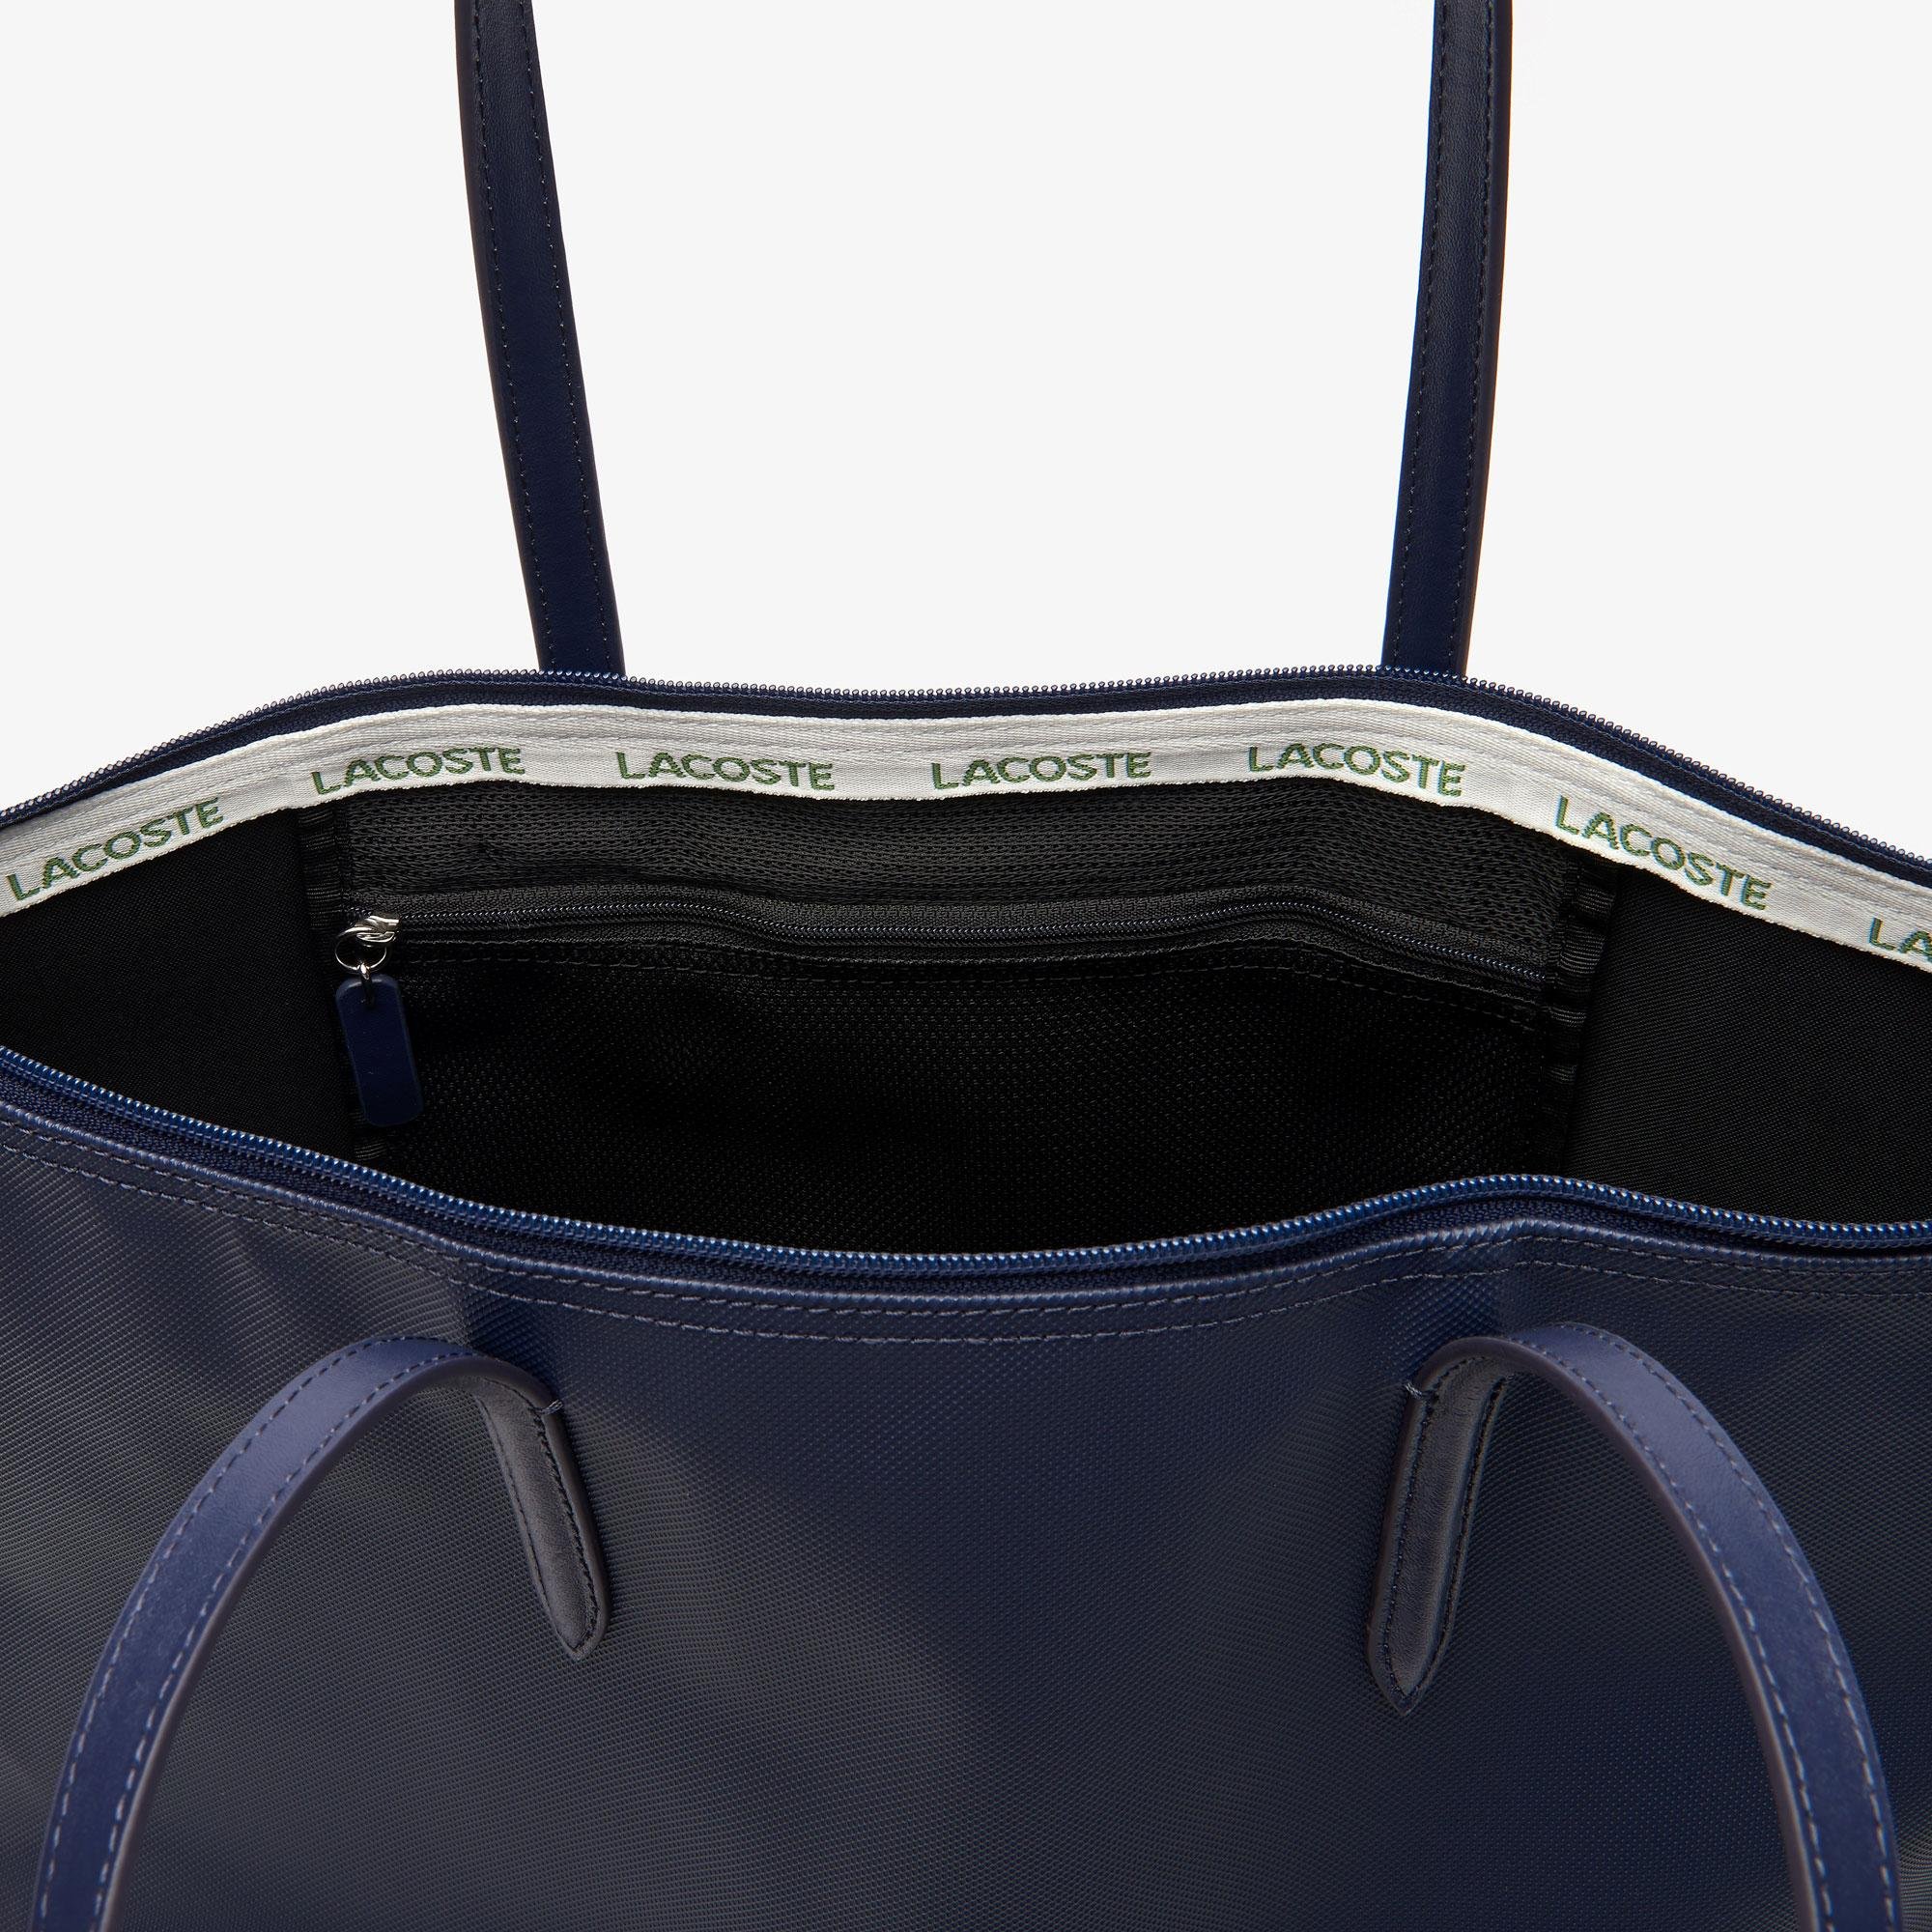 Lacoste damska torebka tote bag L.12.12 Concept zasuwana na zamek błyskawiczny